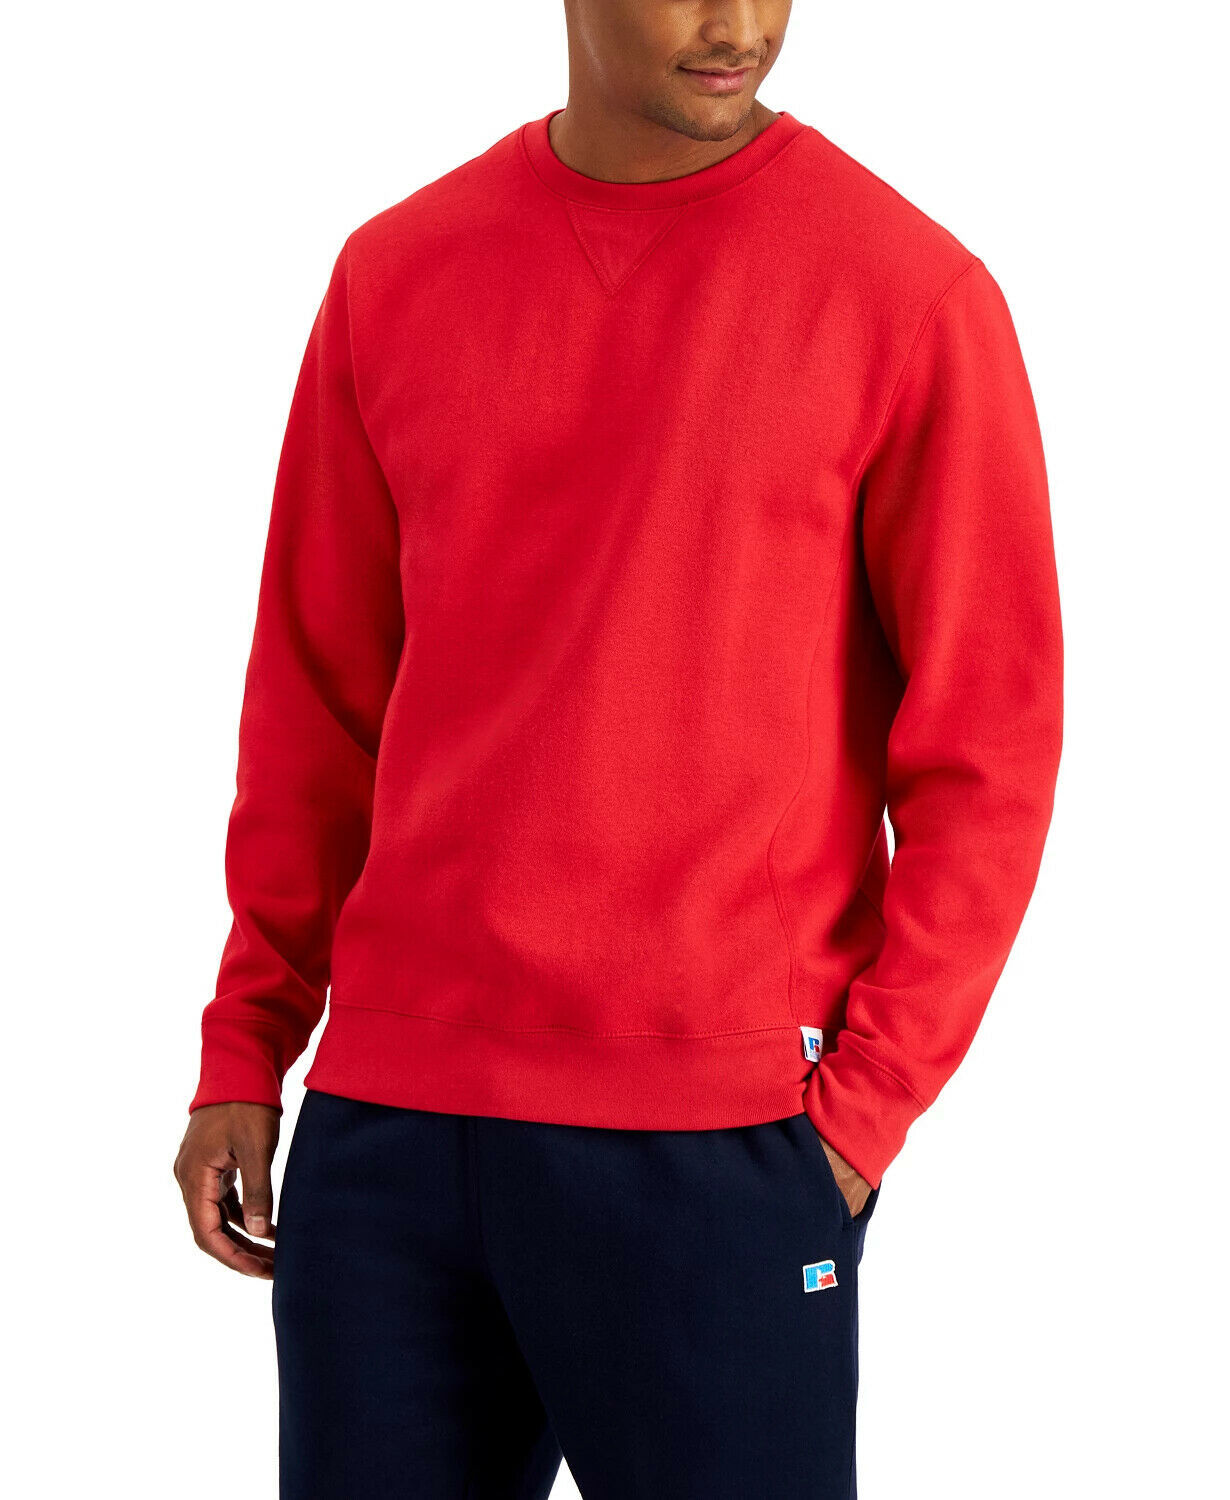 Primary image for Russell Athletic Men's Solid Fleece Sweatshirt in Red Coast-Medium